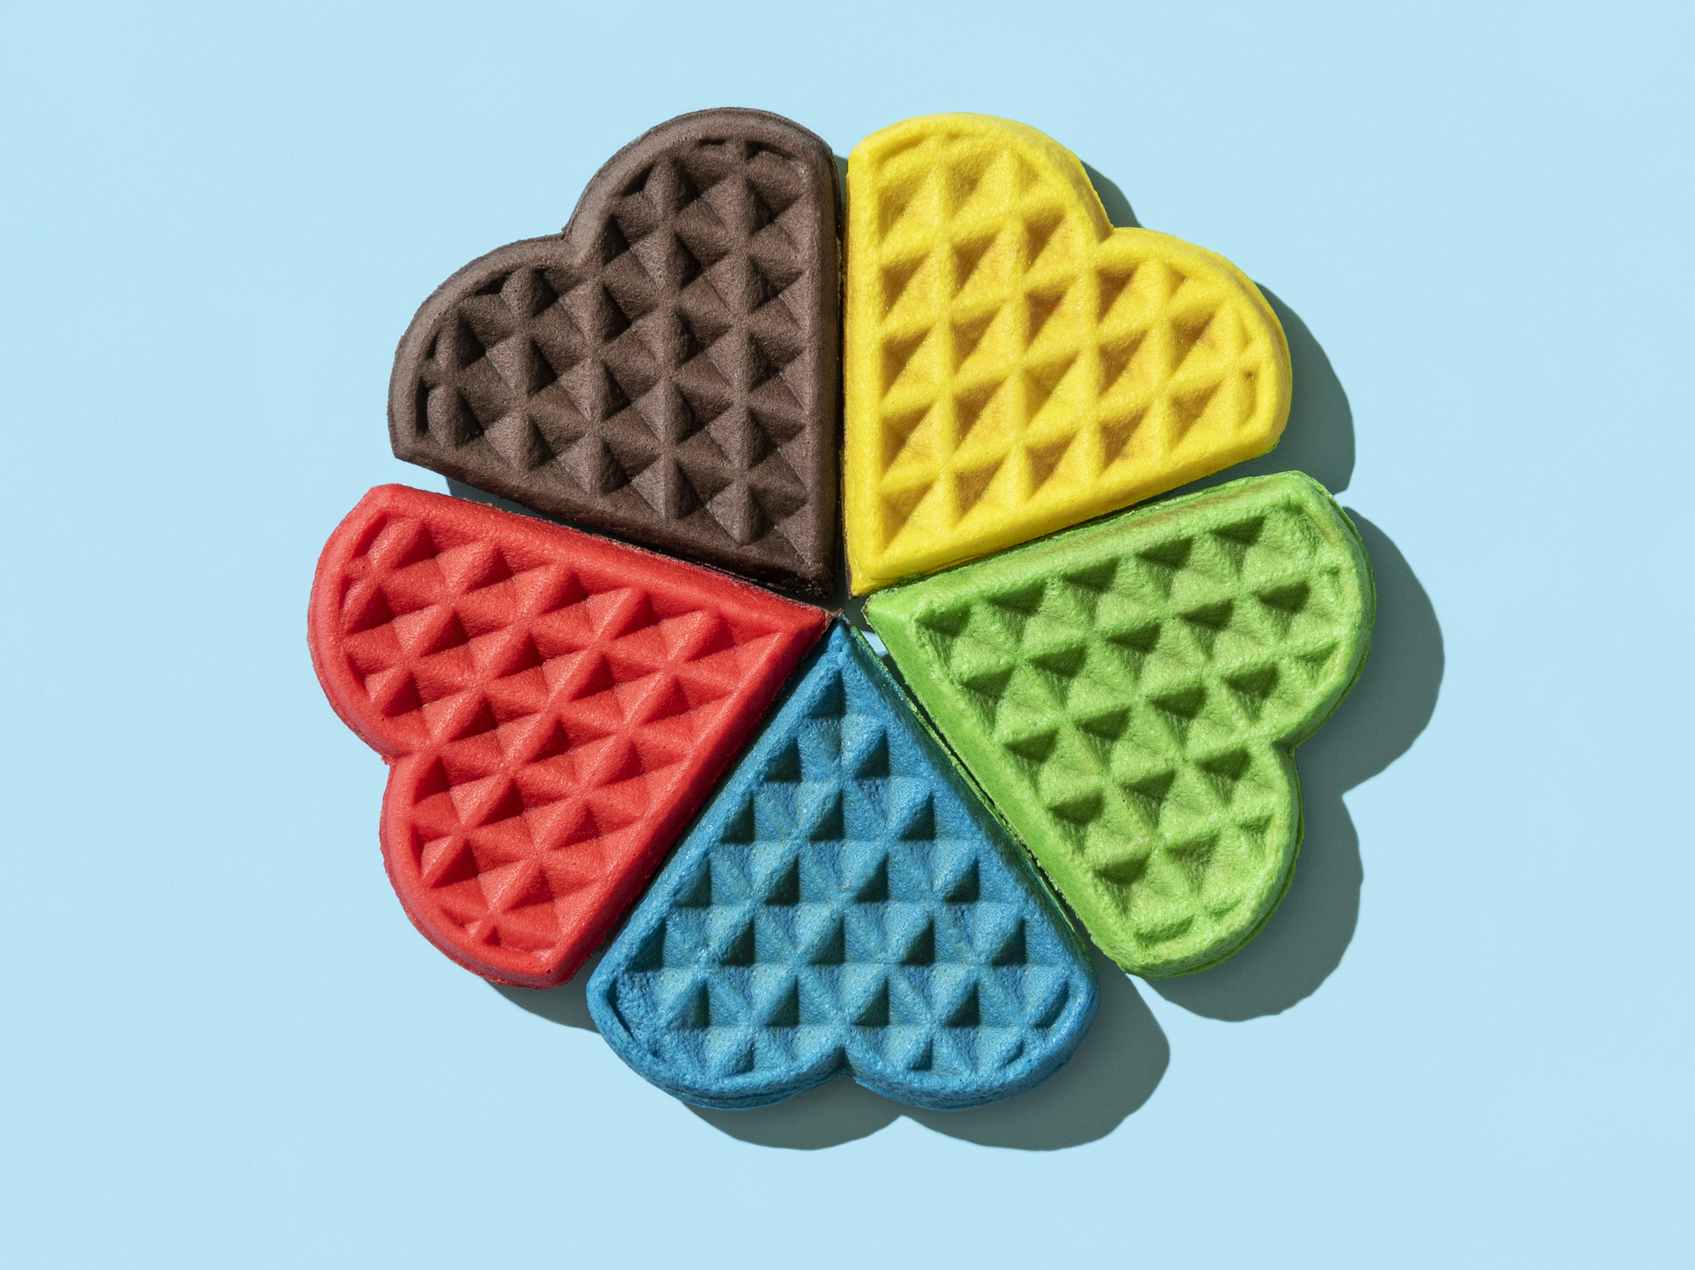 Rainbow colored heart-shaped waffles arranged on a blue background